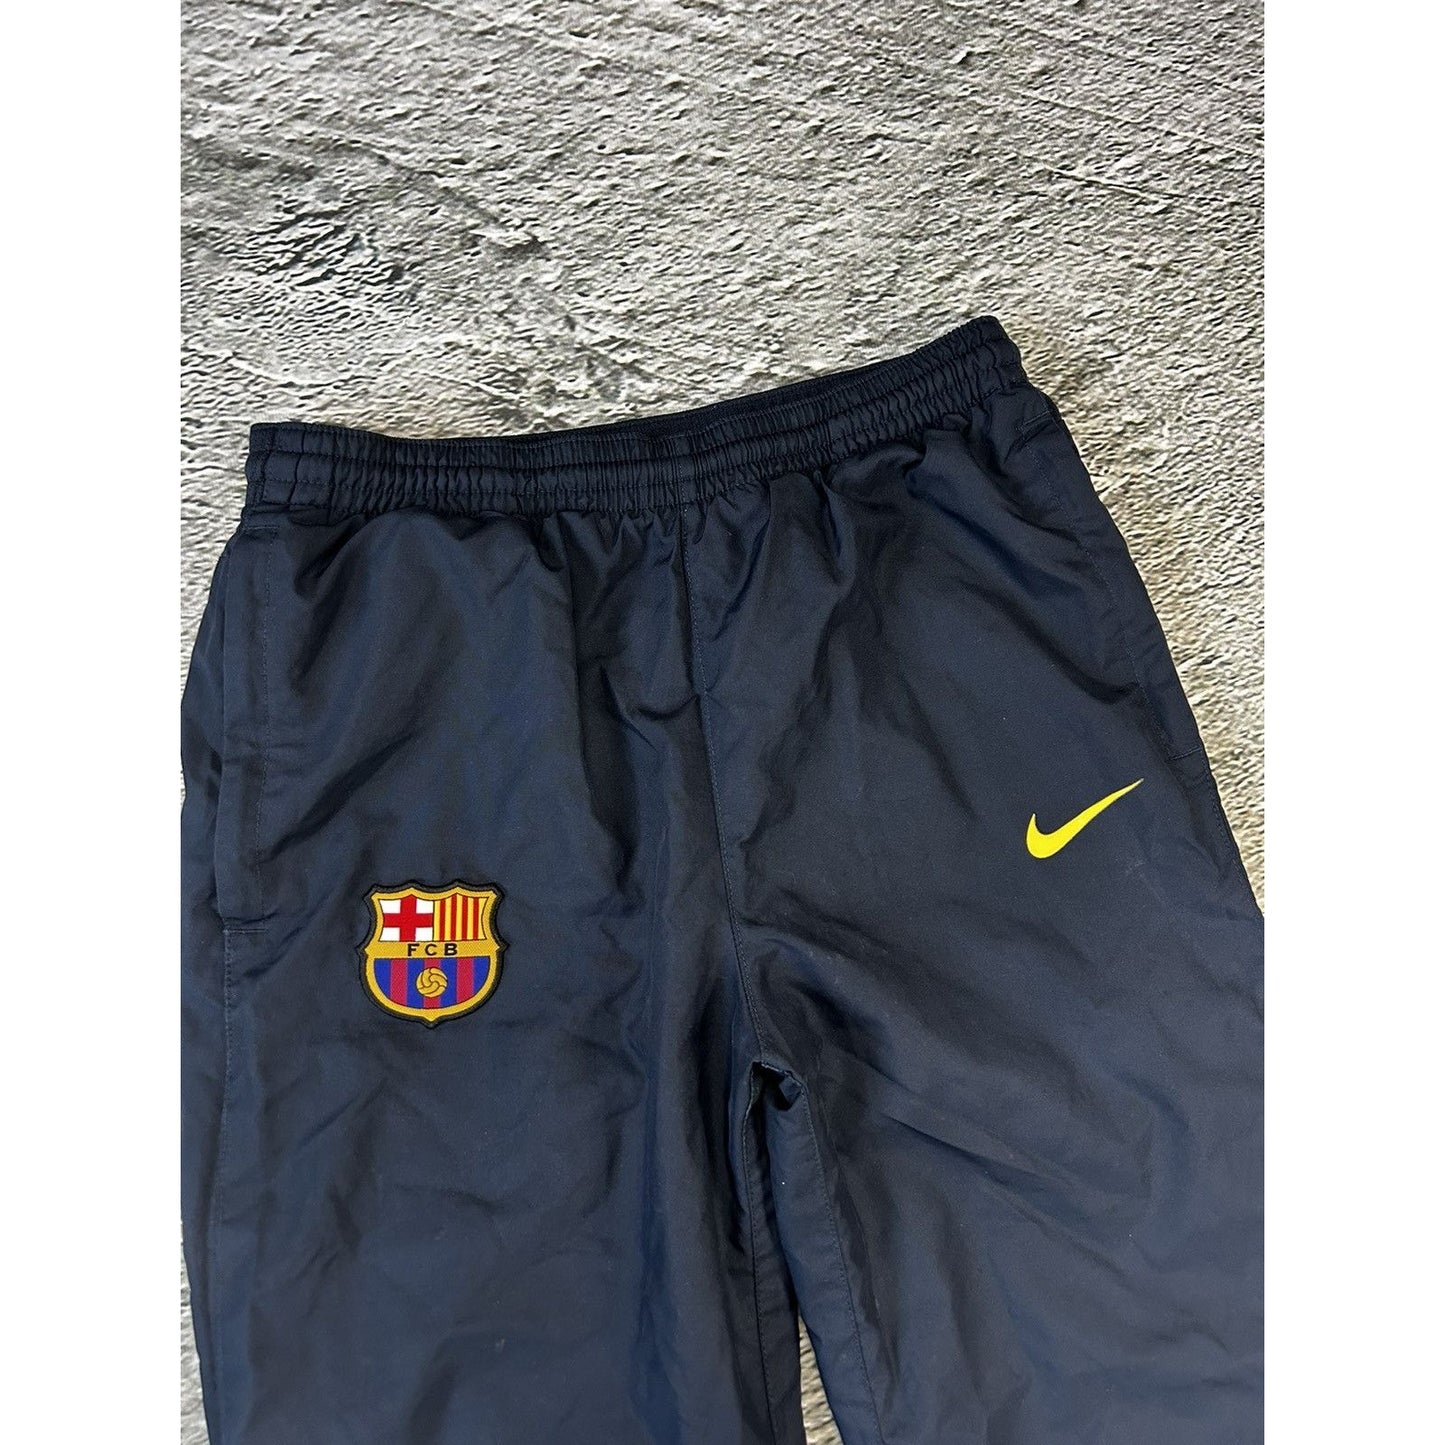 FC Barcelona Nike track suit navy pants jacket